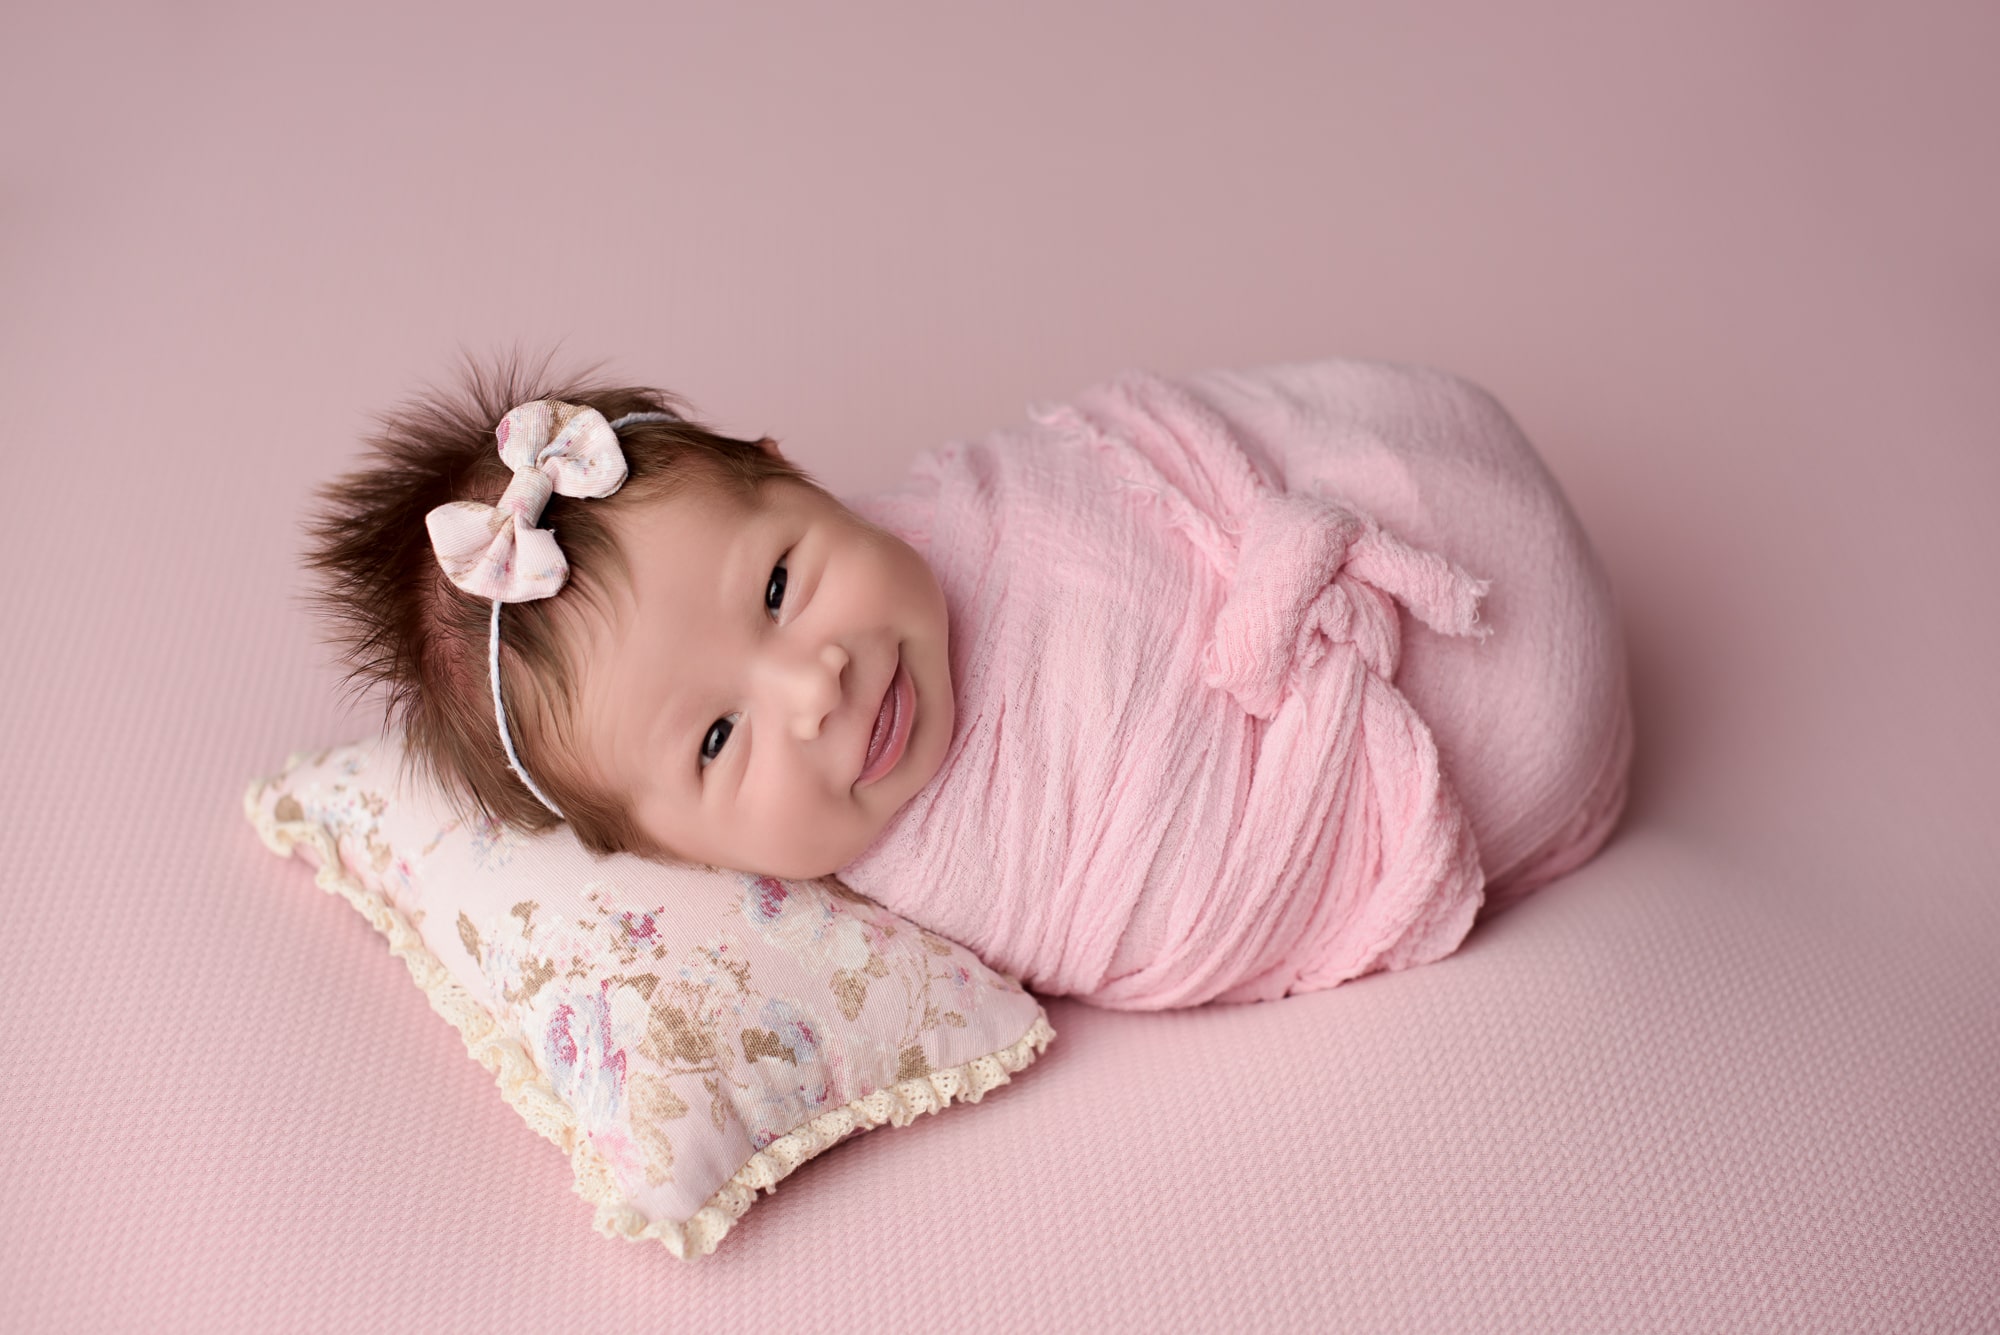 Newborn Photography Blog Archives - Amanda Dams Photography